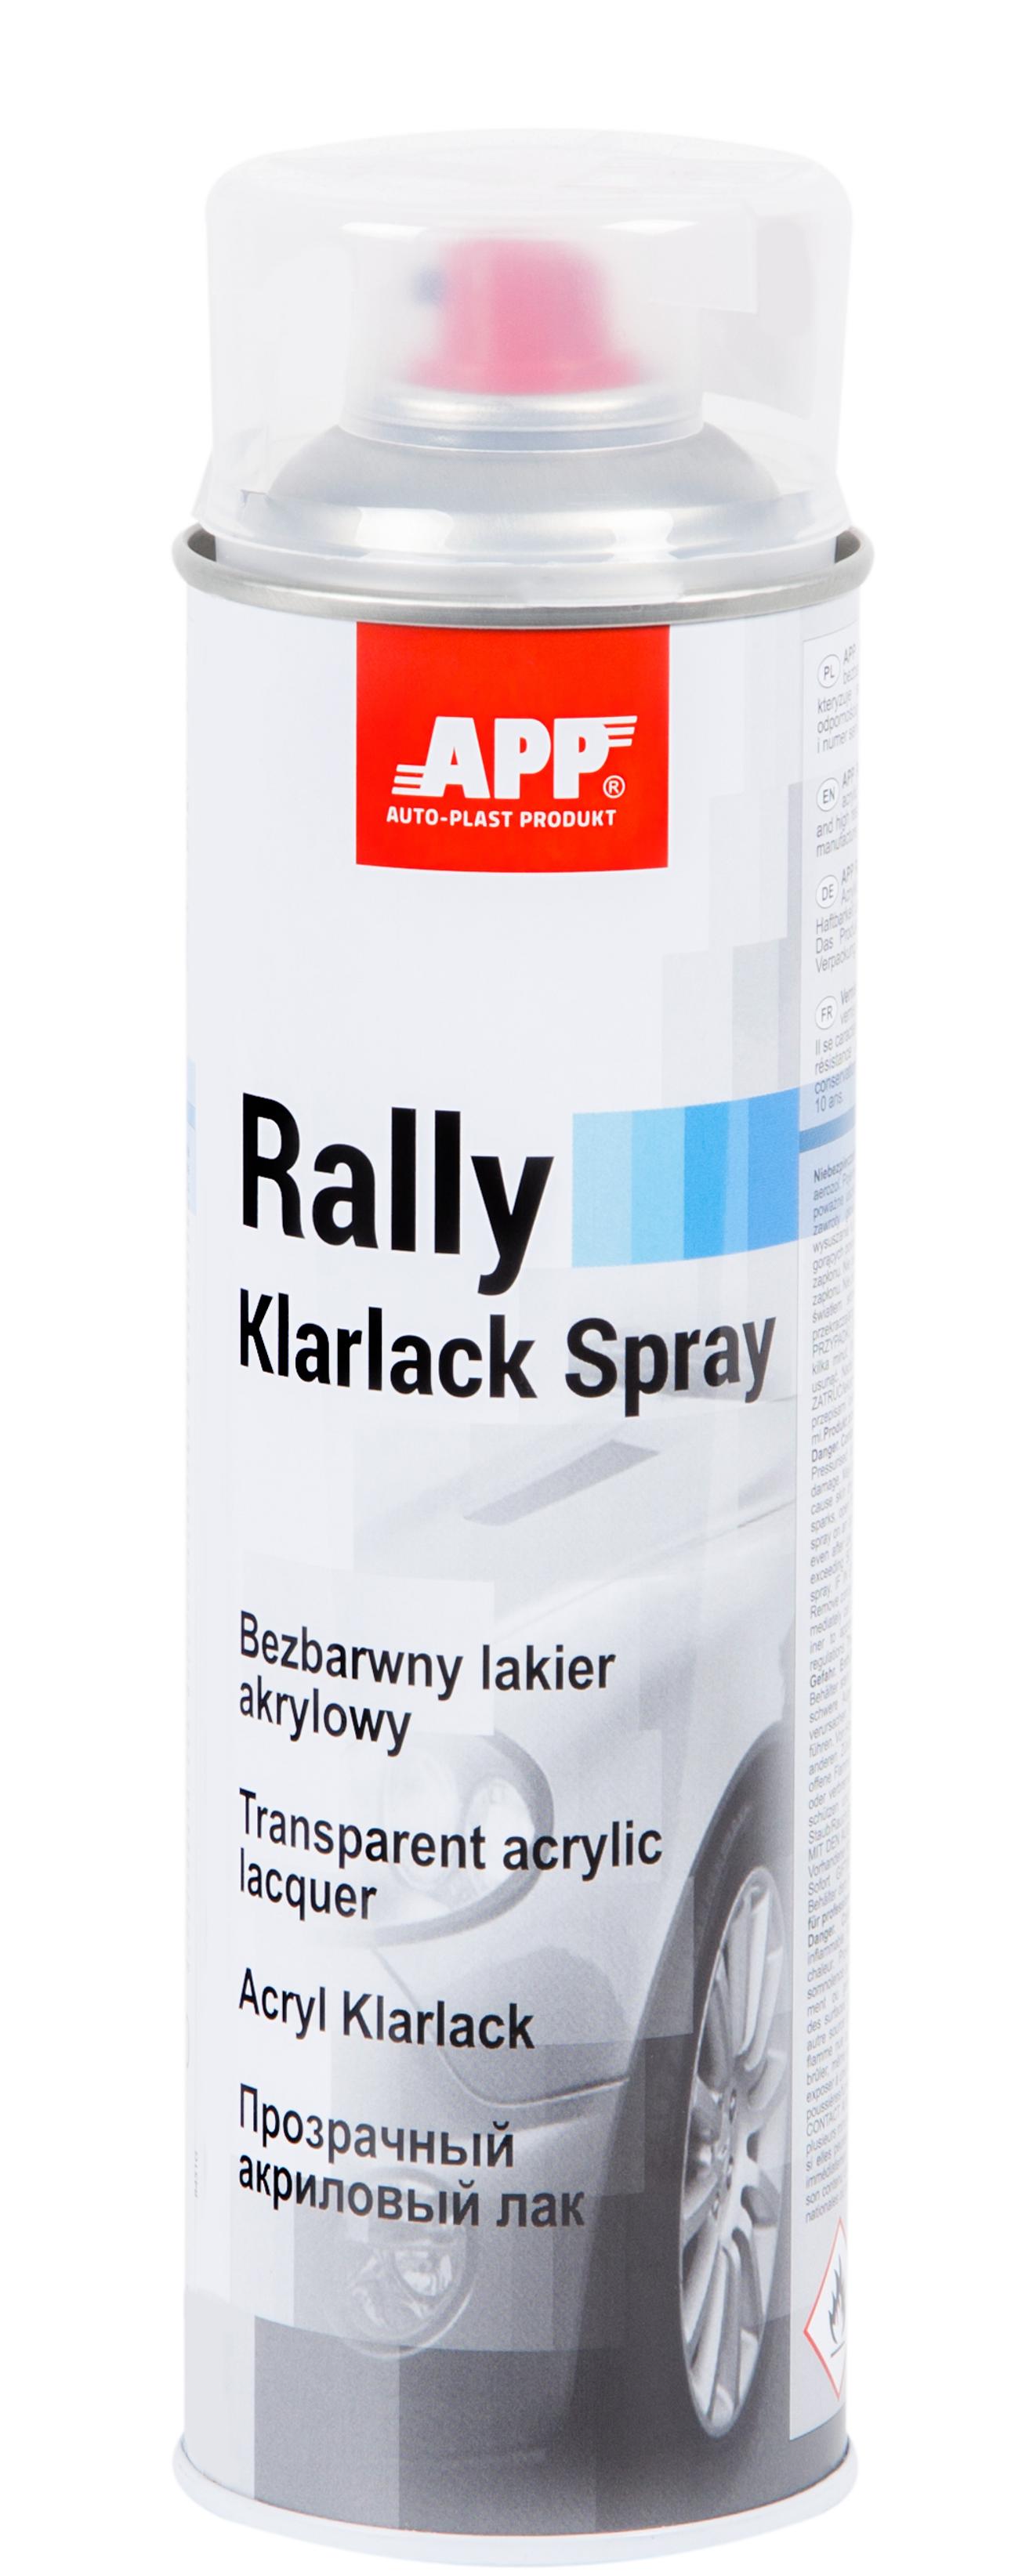 APP 210105 Rally Color Spray - Acryllack 1K Klarlack 500 ml | Sprühdose klar Lack Spraydose Sprühlack